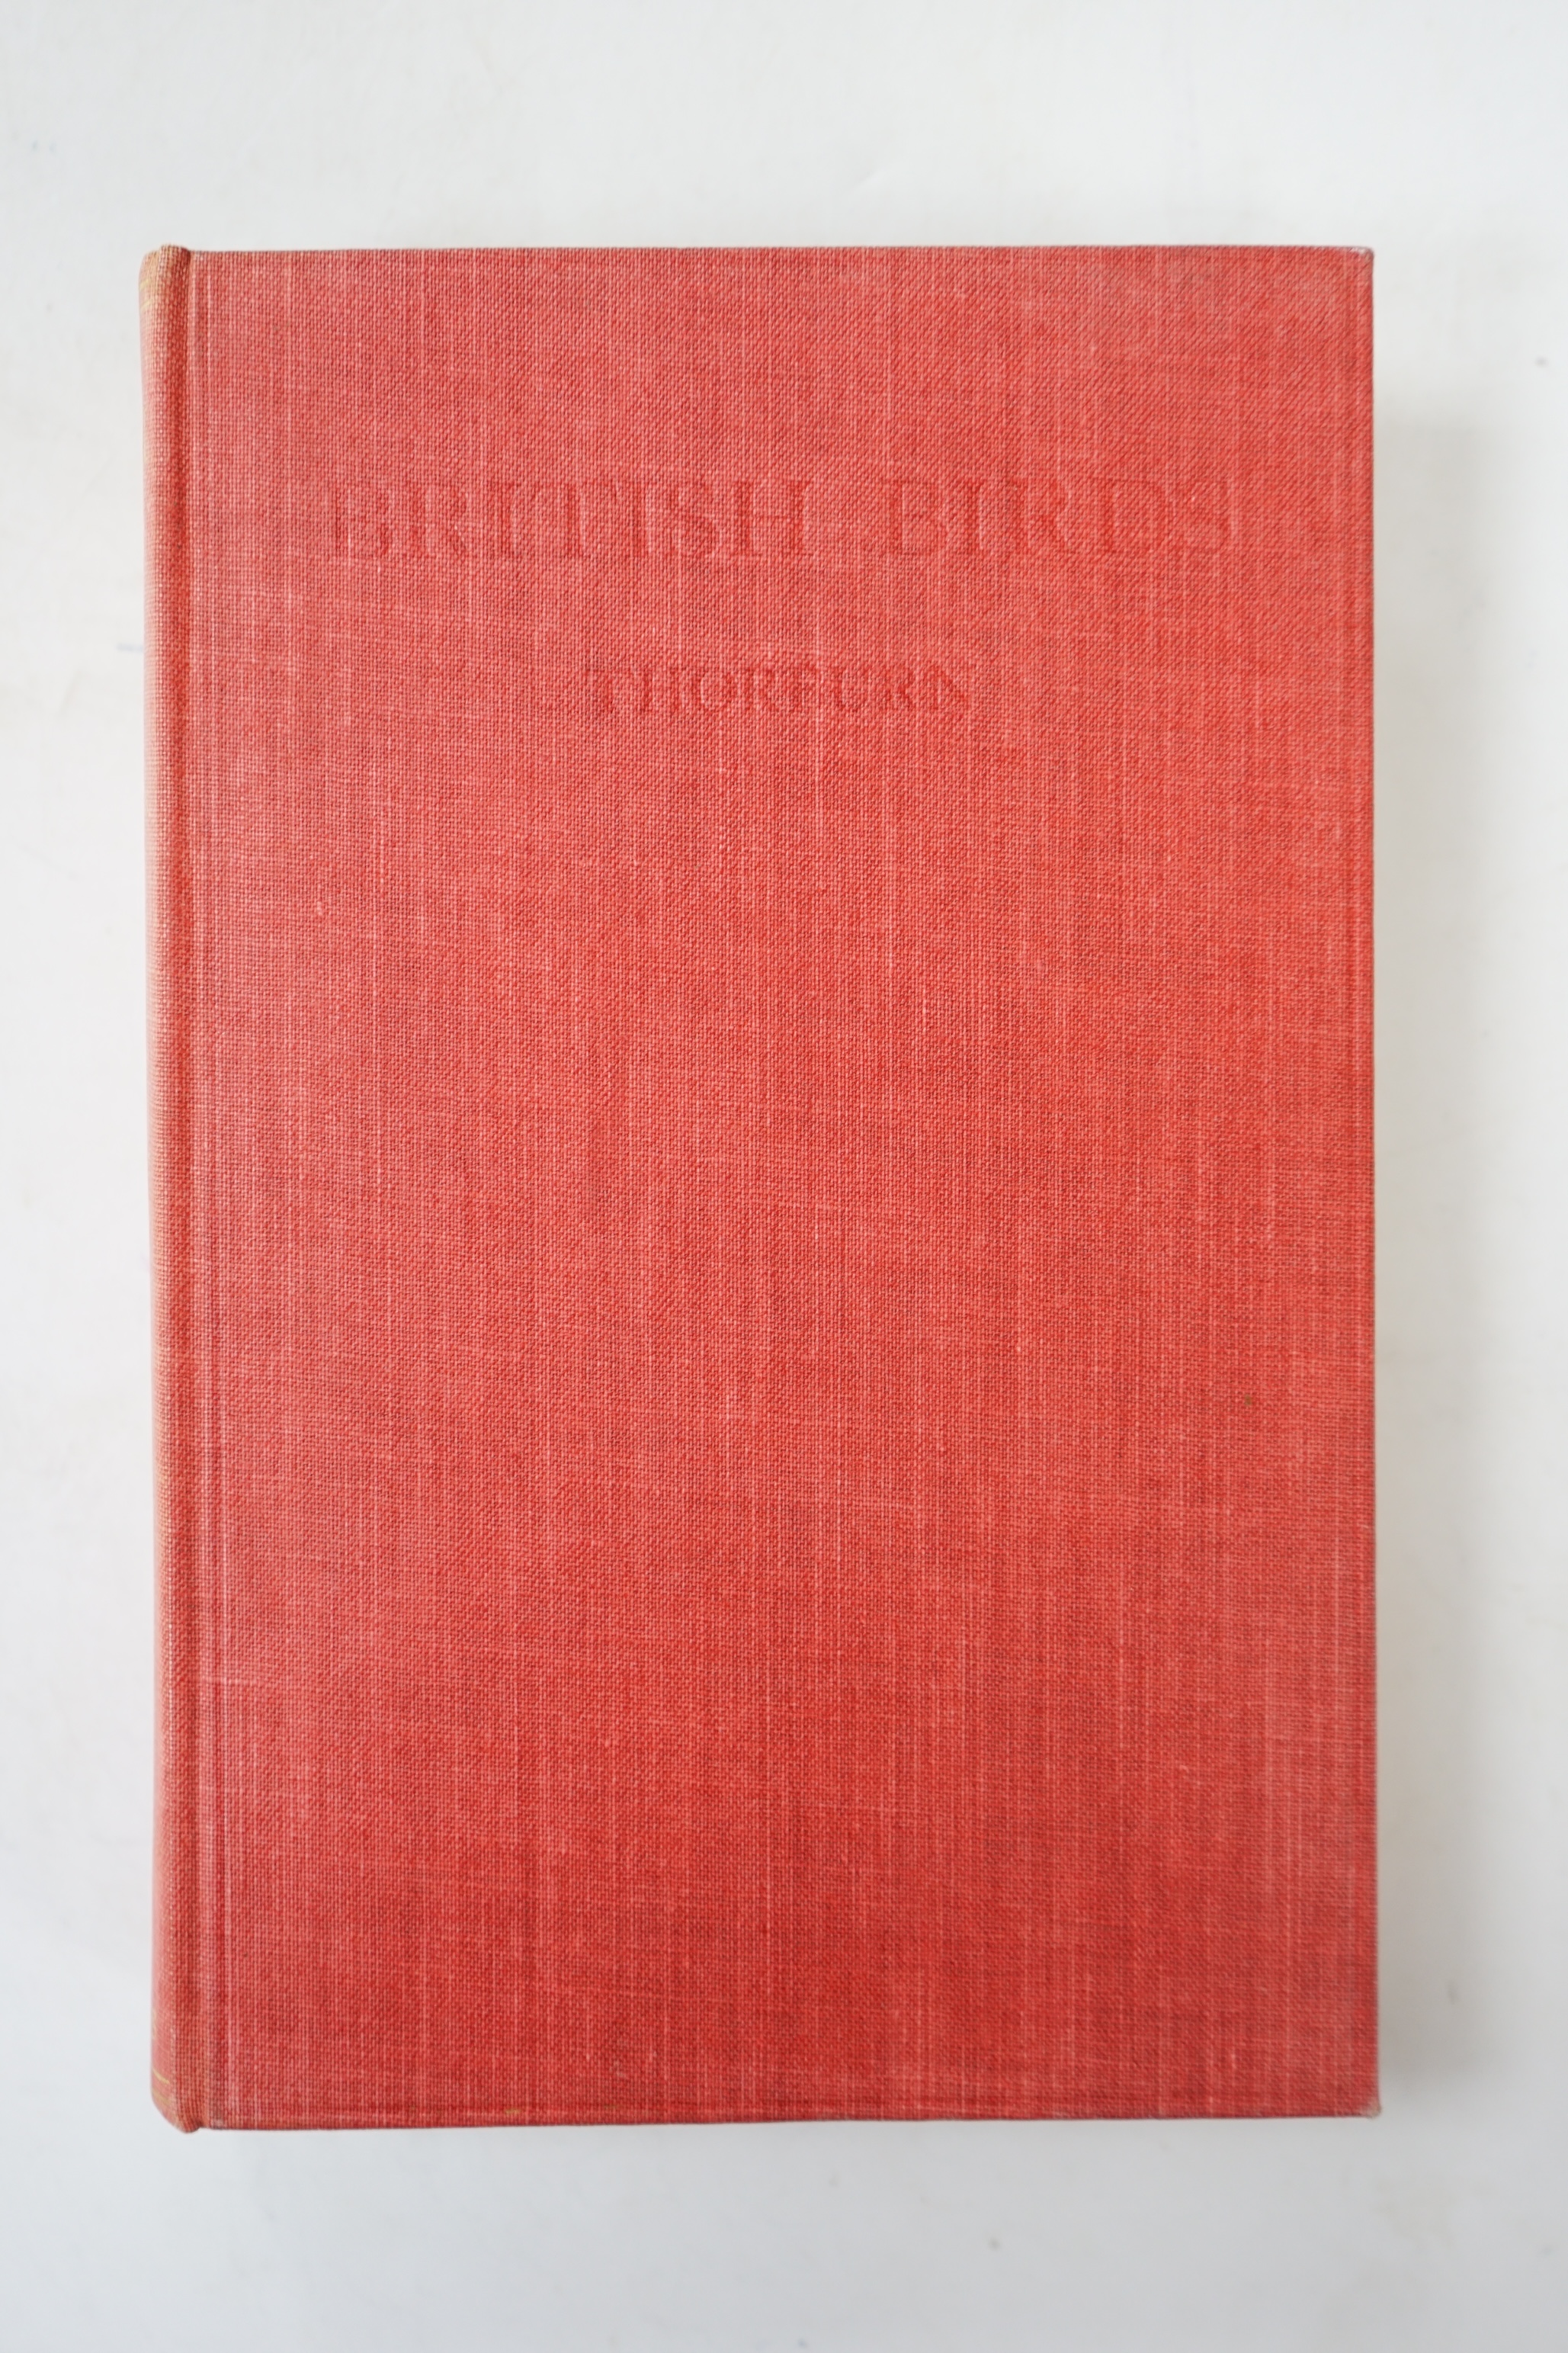 Thorburn, Archibald - British Birds, new edition (revised), 4 vols. 192 coloured plates; original gilt-lettered cloth, cr. 8vo. 1925-26